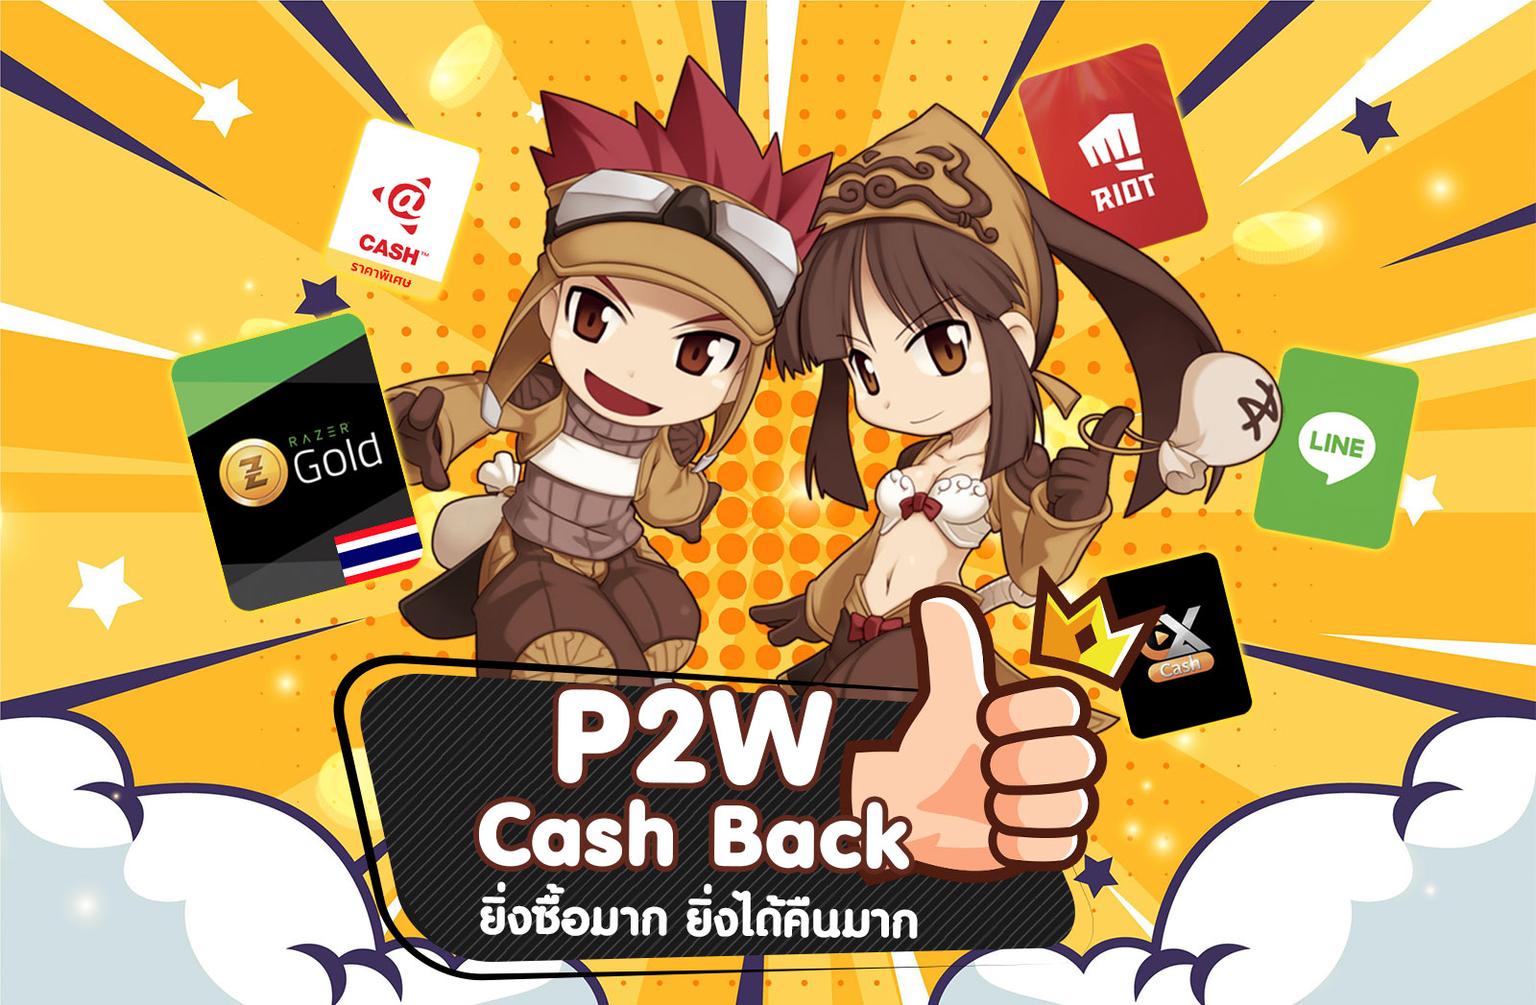 Cashback P2W TOPUP